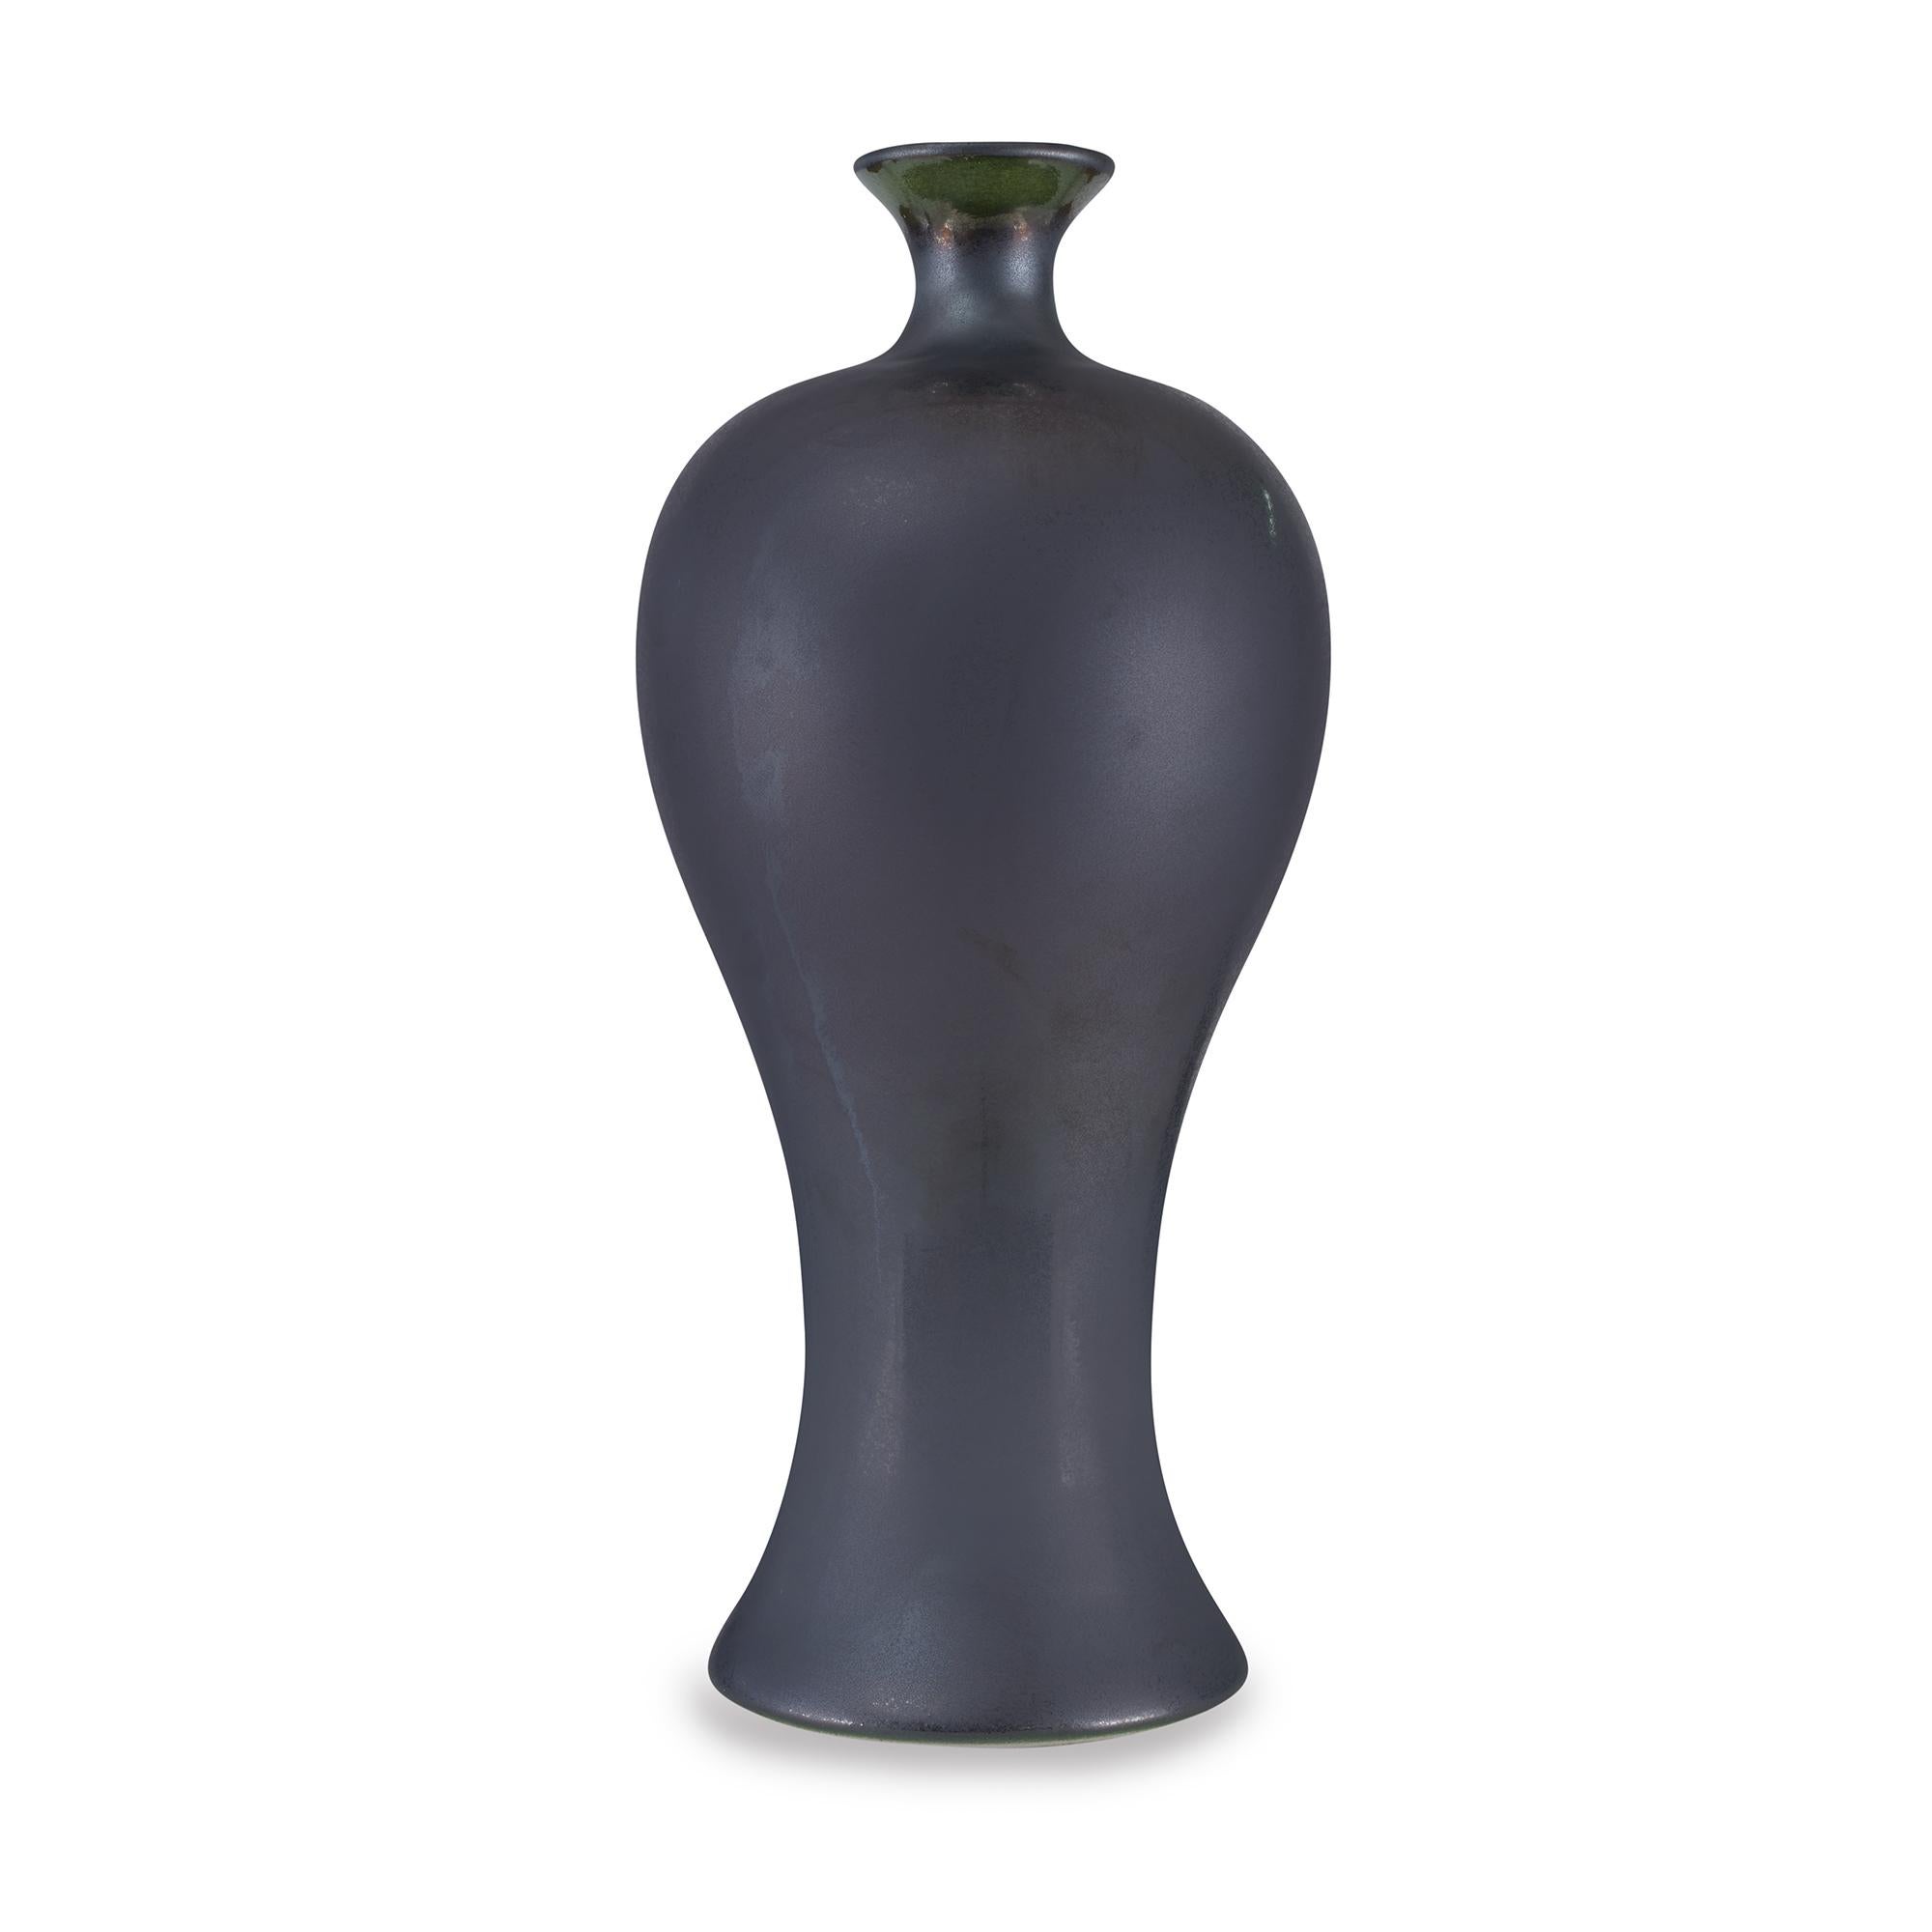 (Black) Quarry Vase in Ceramic by CuratedKravet